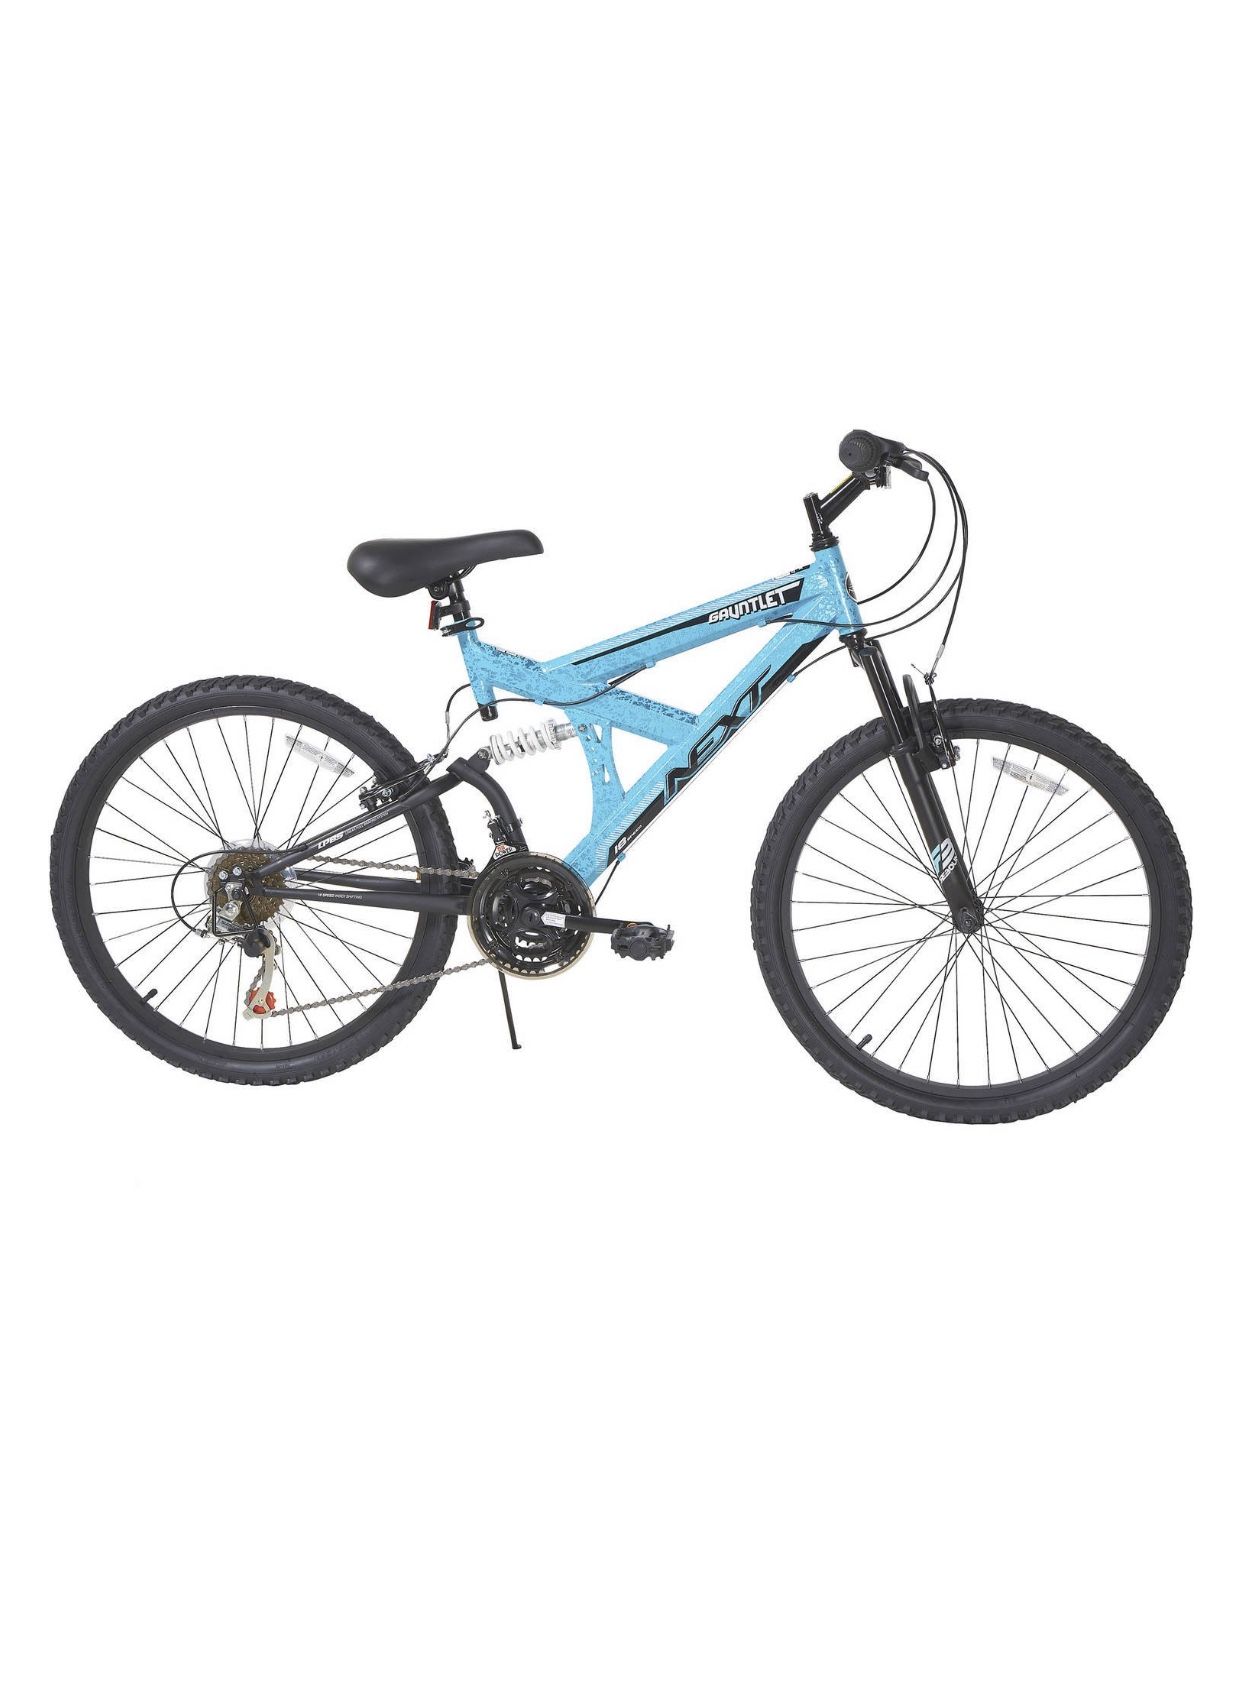 NEXT 24" Gauntlet Girls Mountain Bike, Blue